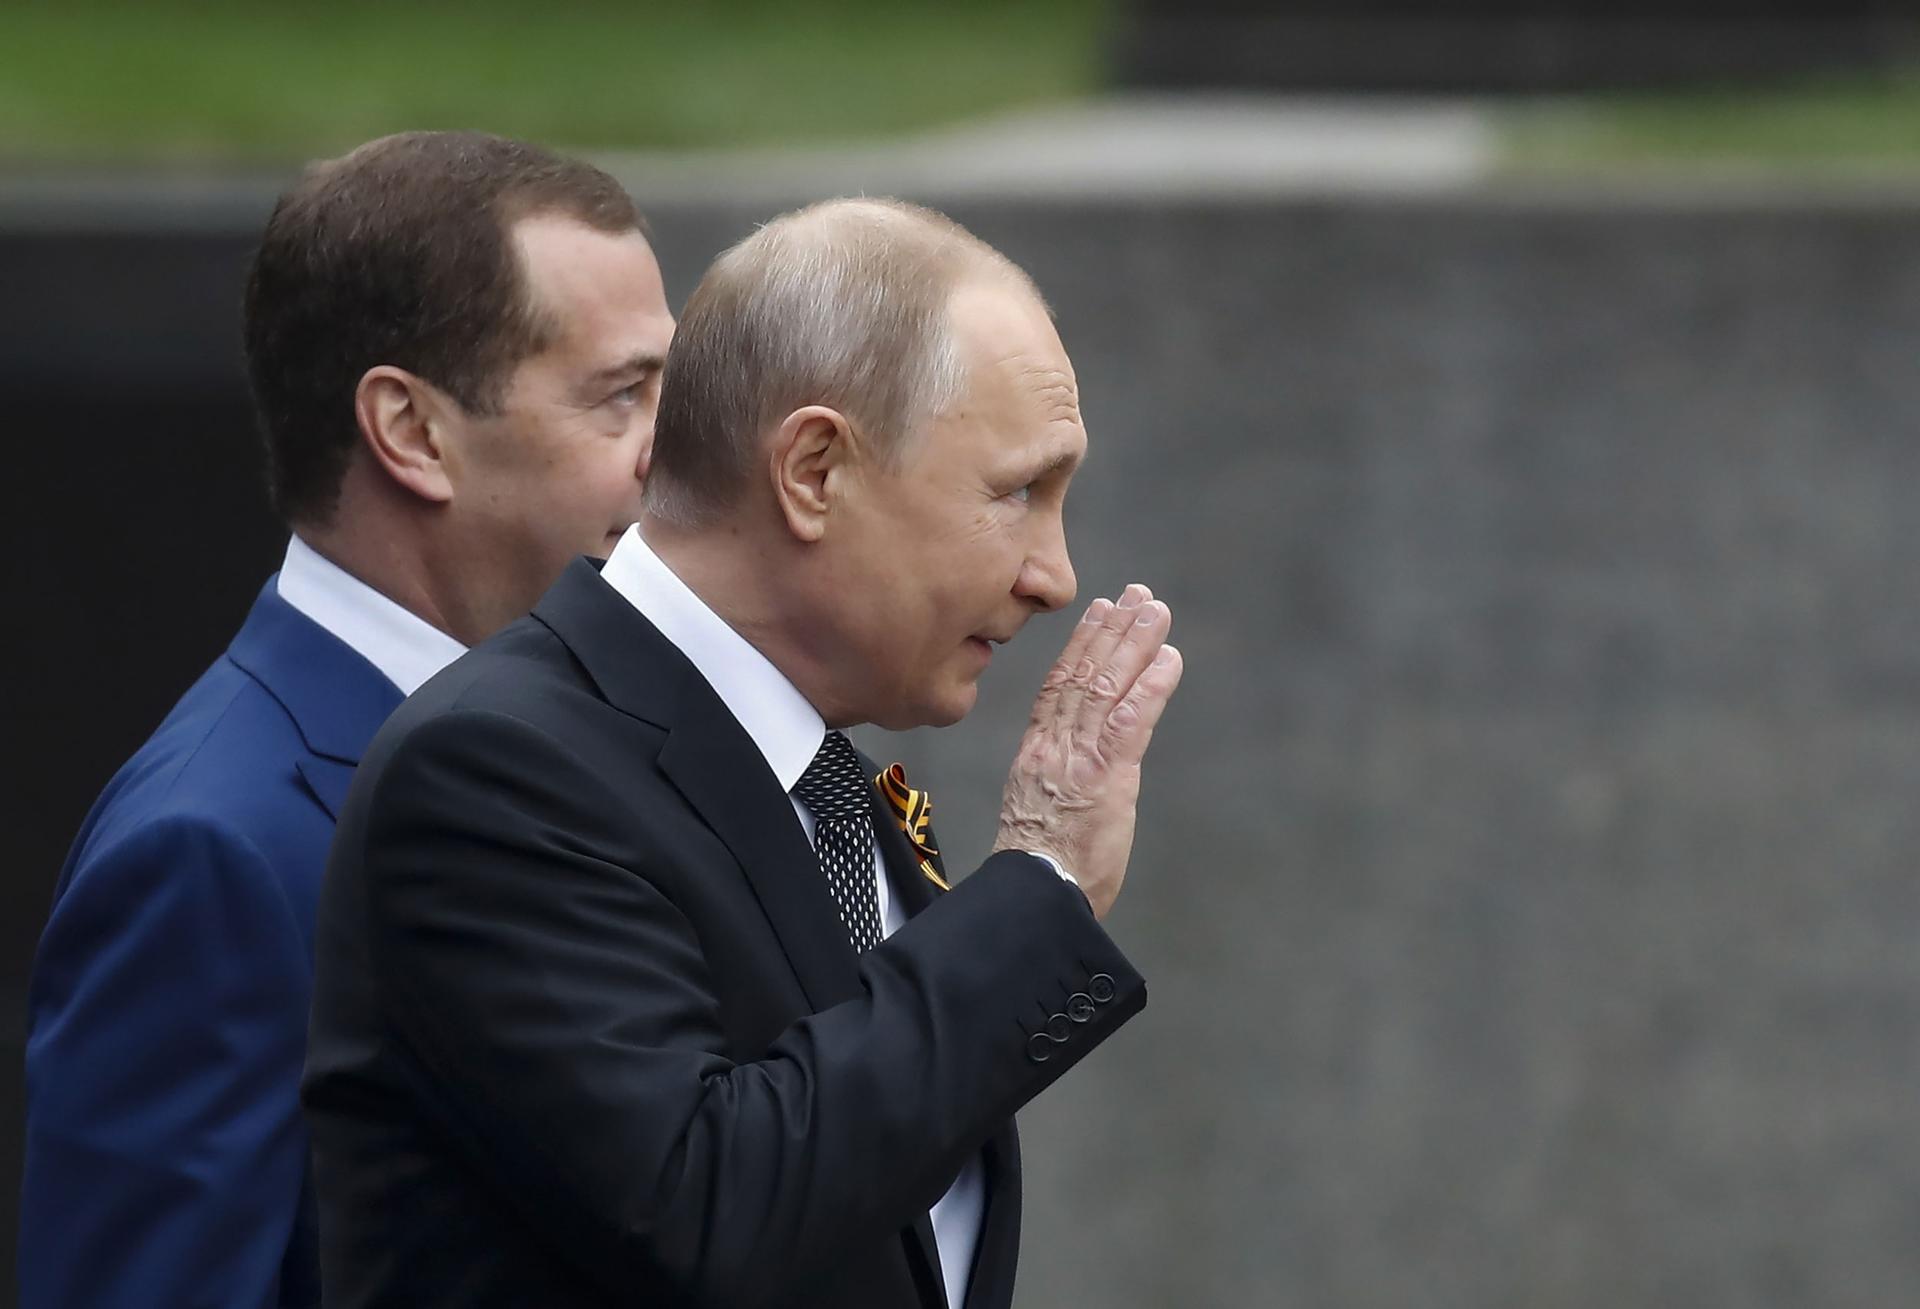 Russian President Vladimir Putin is shown waving with Prime Minister Dmitry Medvedev slightly behind him.